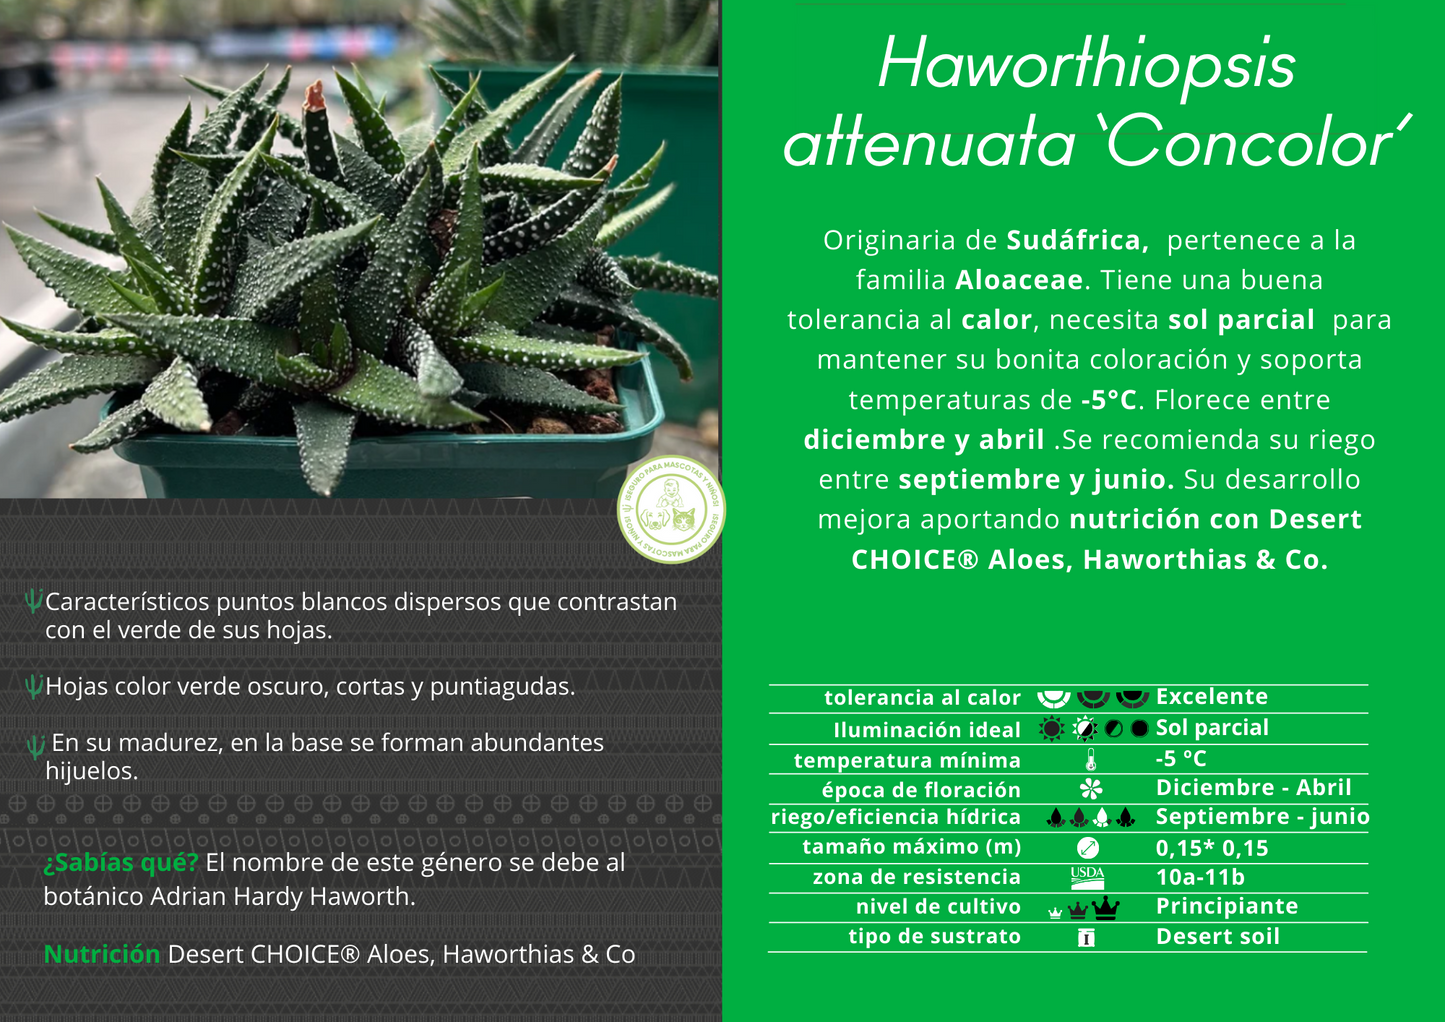 Haworthiopsis attenuata ‘Concolor’